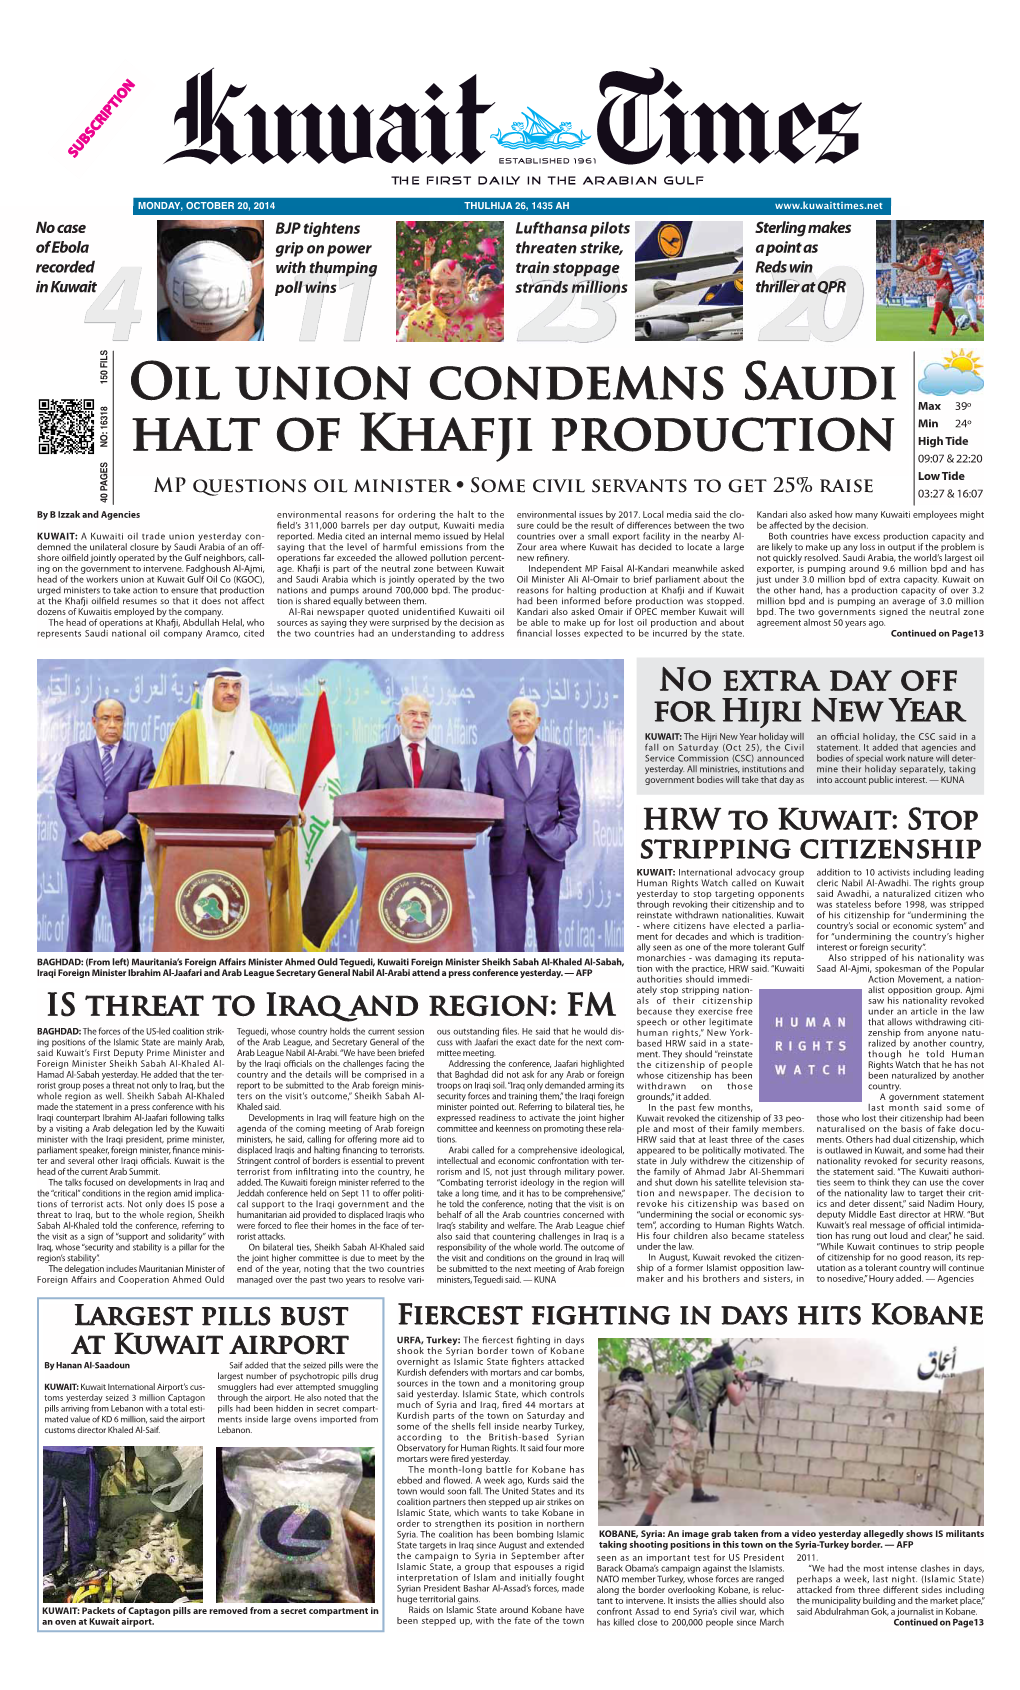 Oil Union Condemns Saudi Halt of Khafji Production